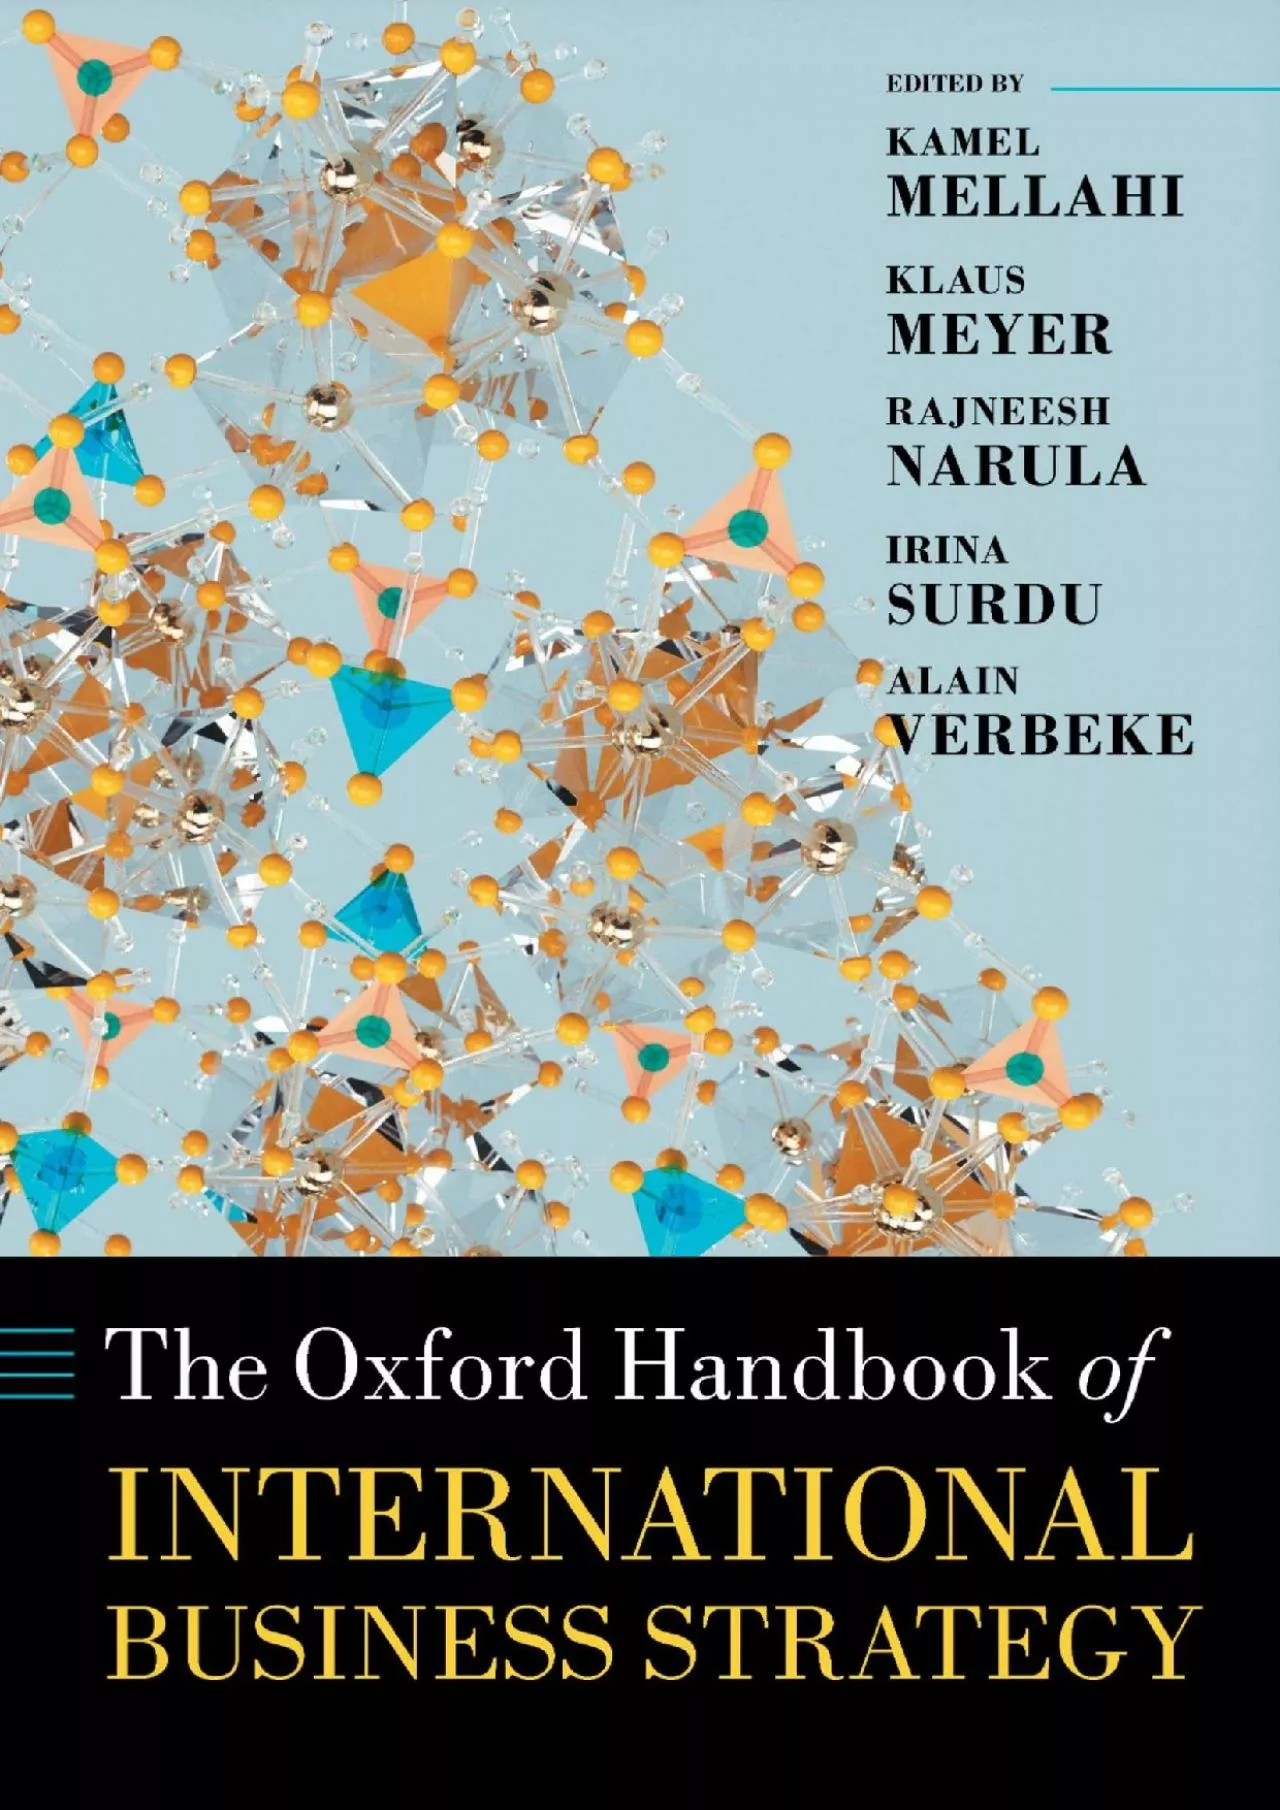 (DOWNLOAD)-The Oxford Handbook of International Business Strategy (Oxford Handbooks)